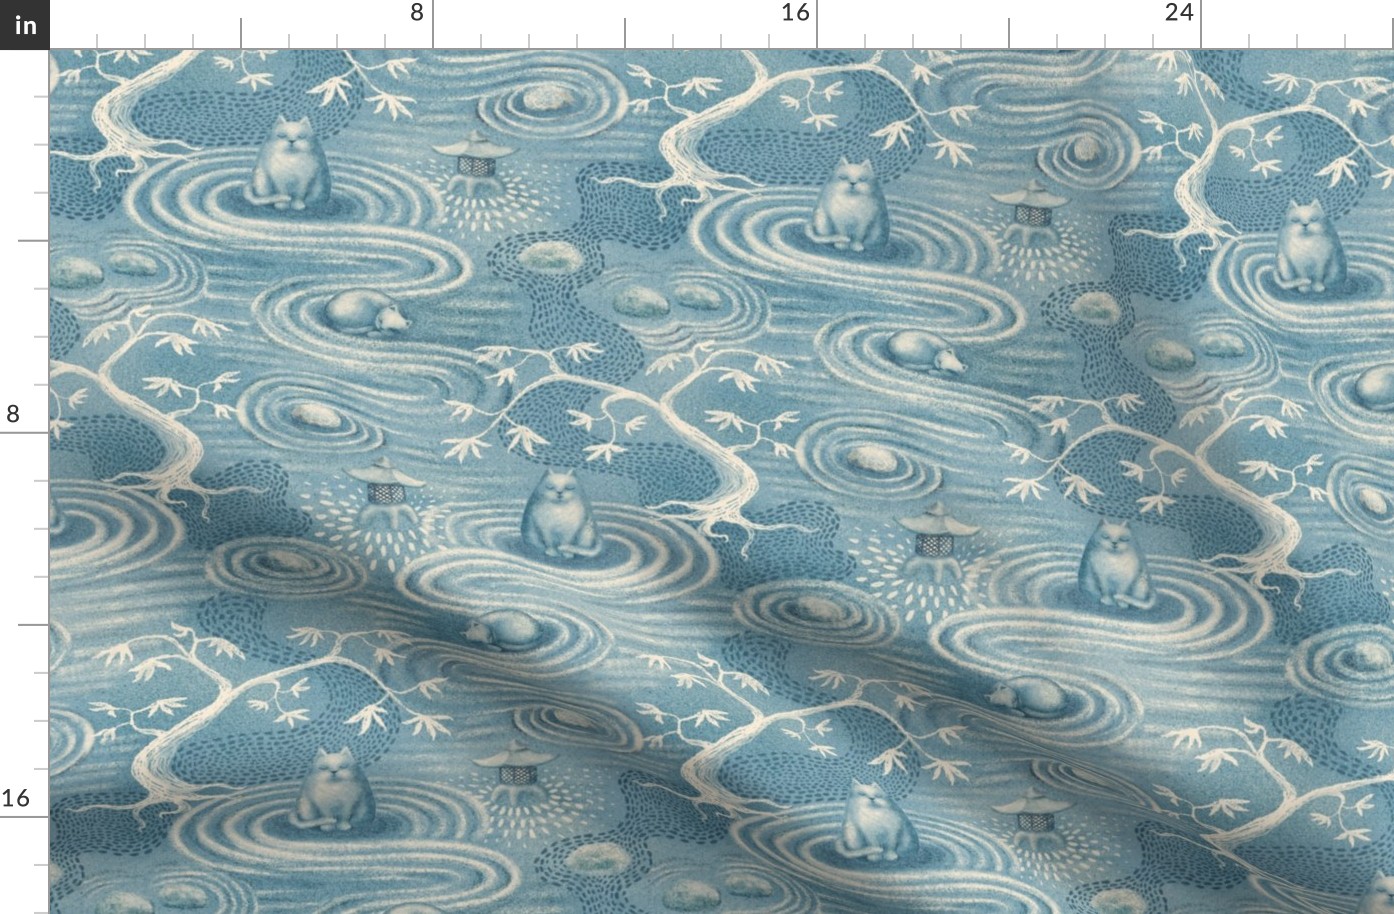 zen cats's garden wallpaper - aqua blue and ivory - medium scale